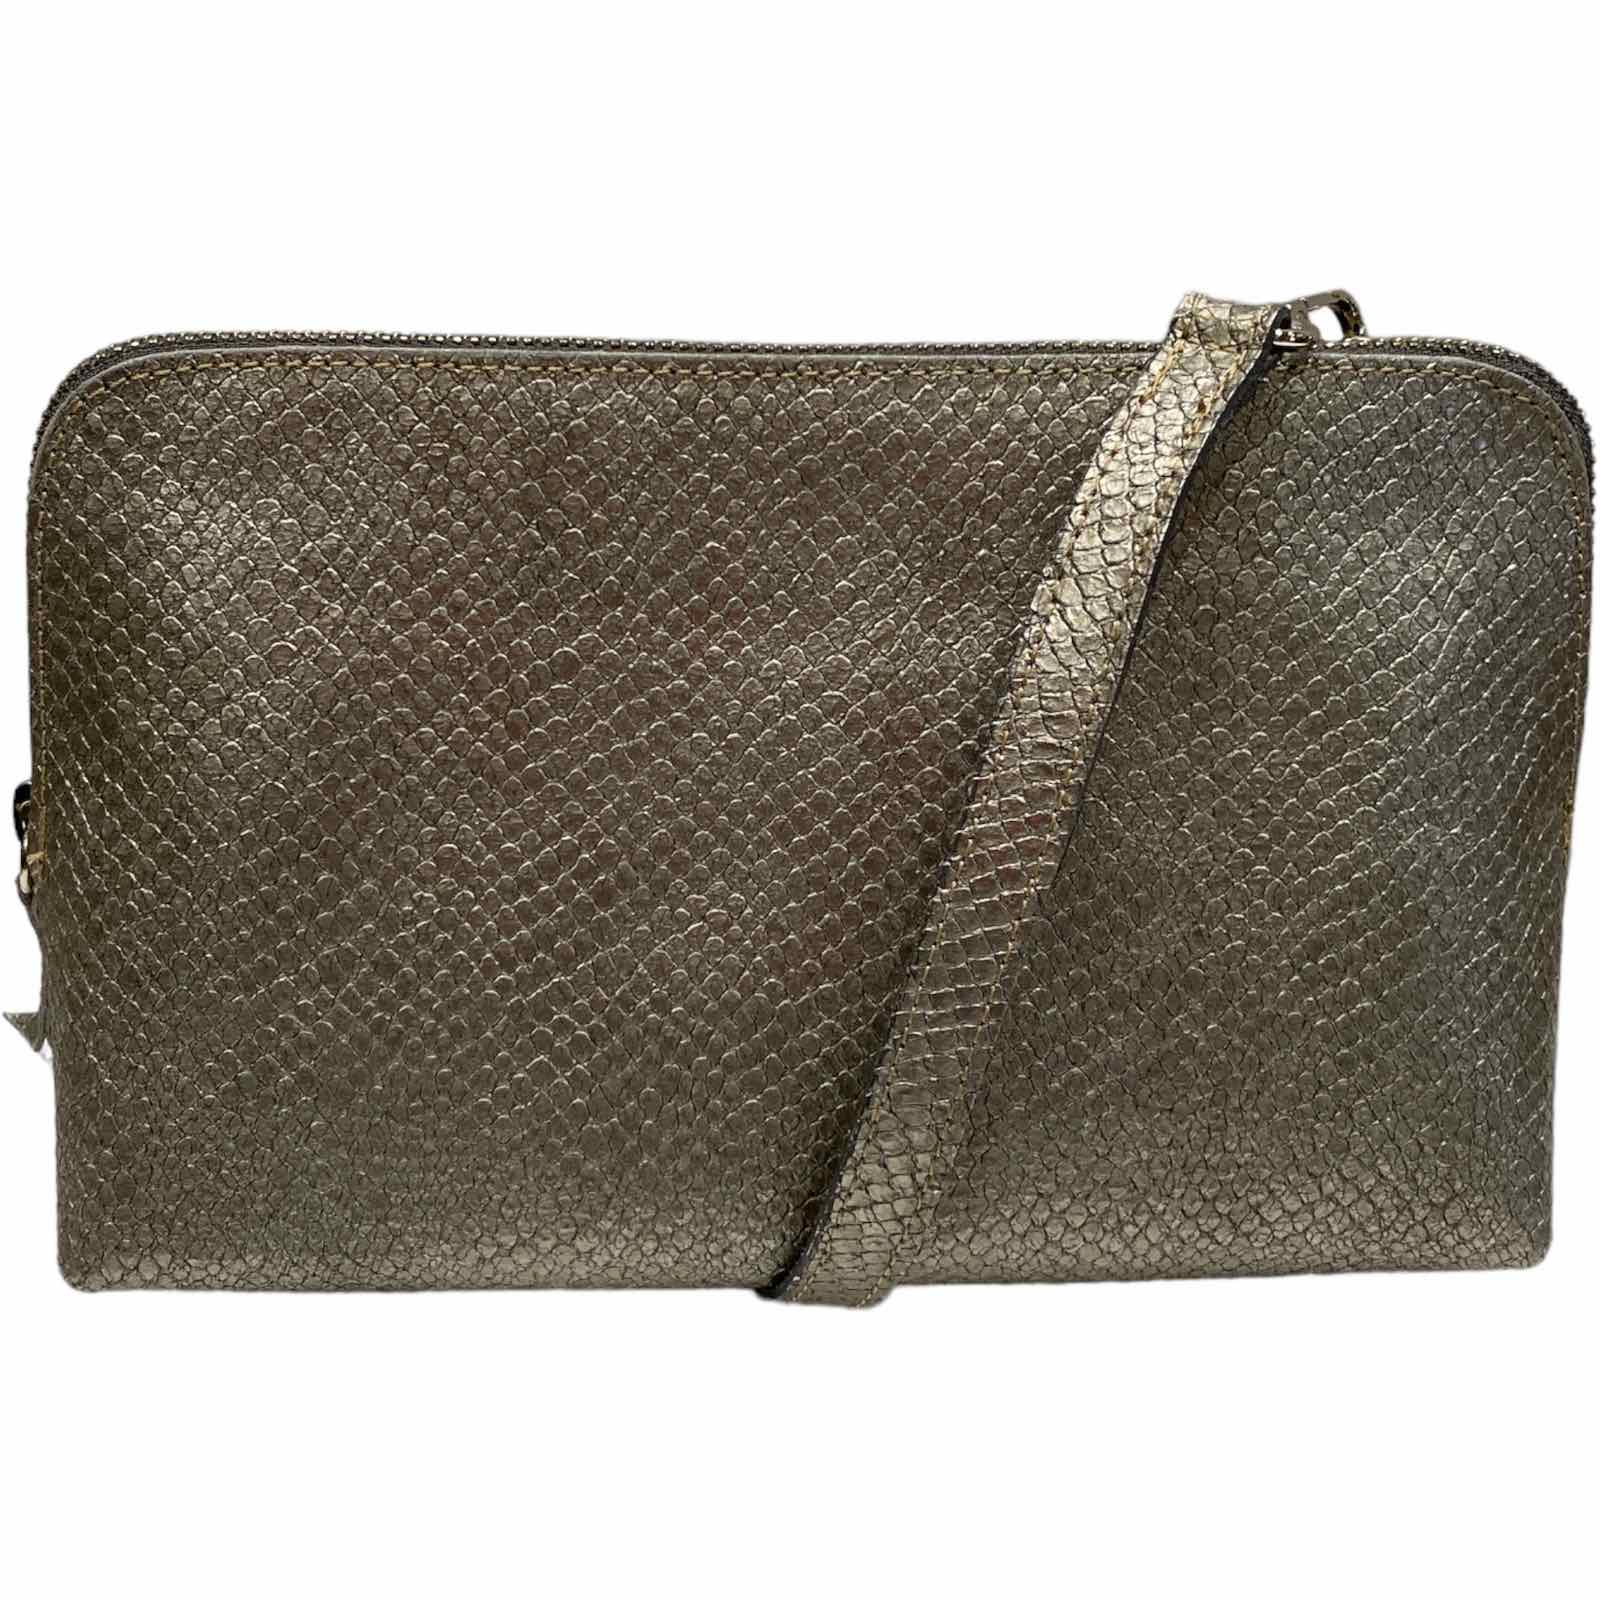 Box XL. Silver leather messenger bag